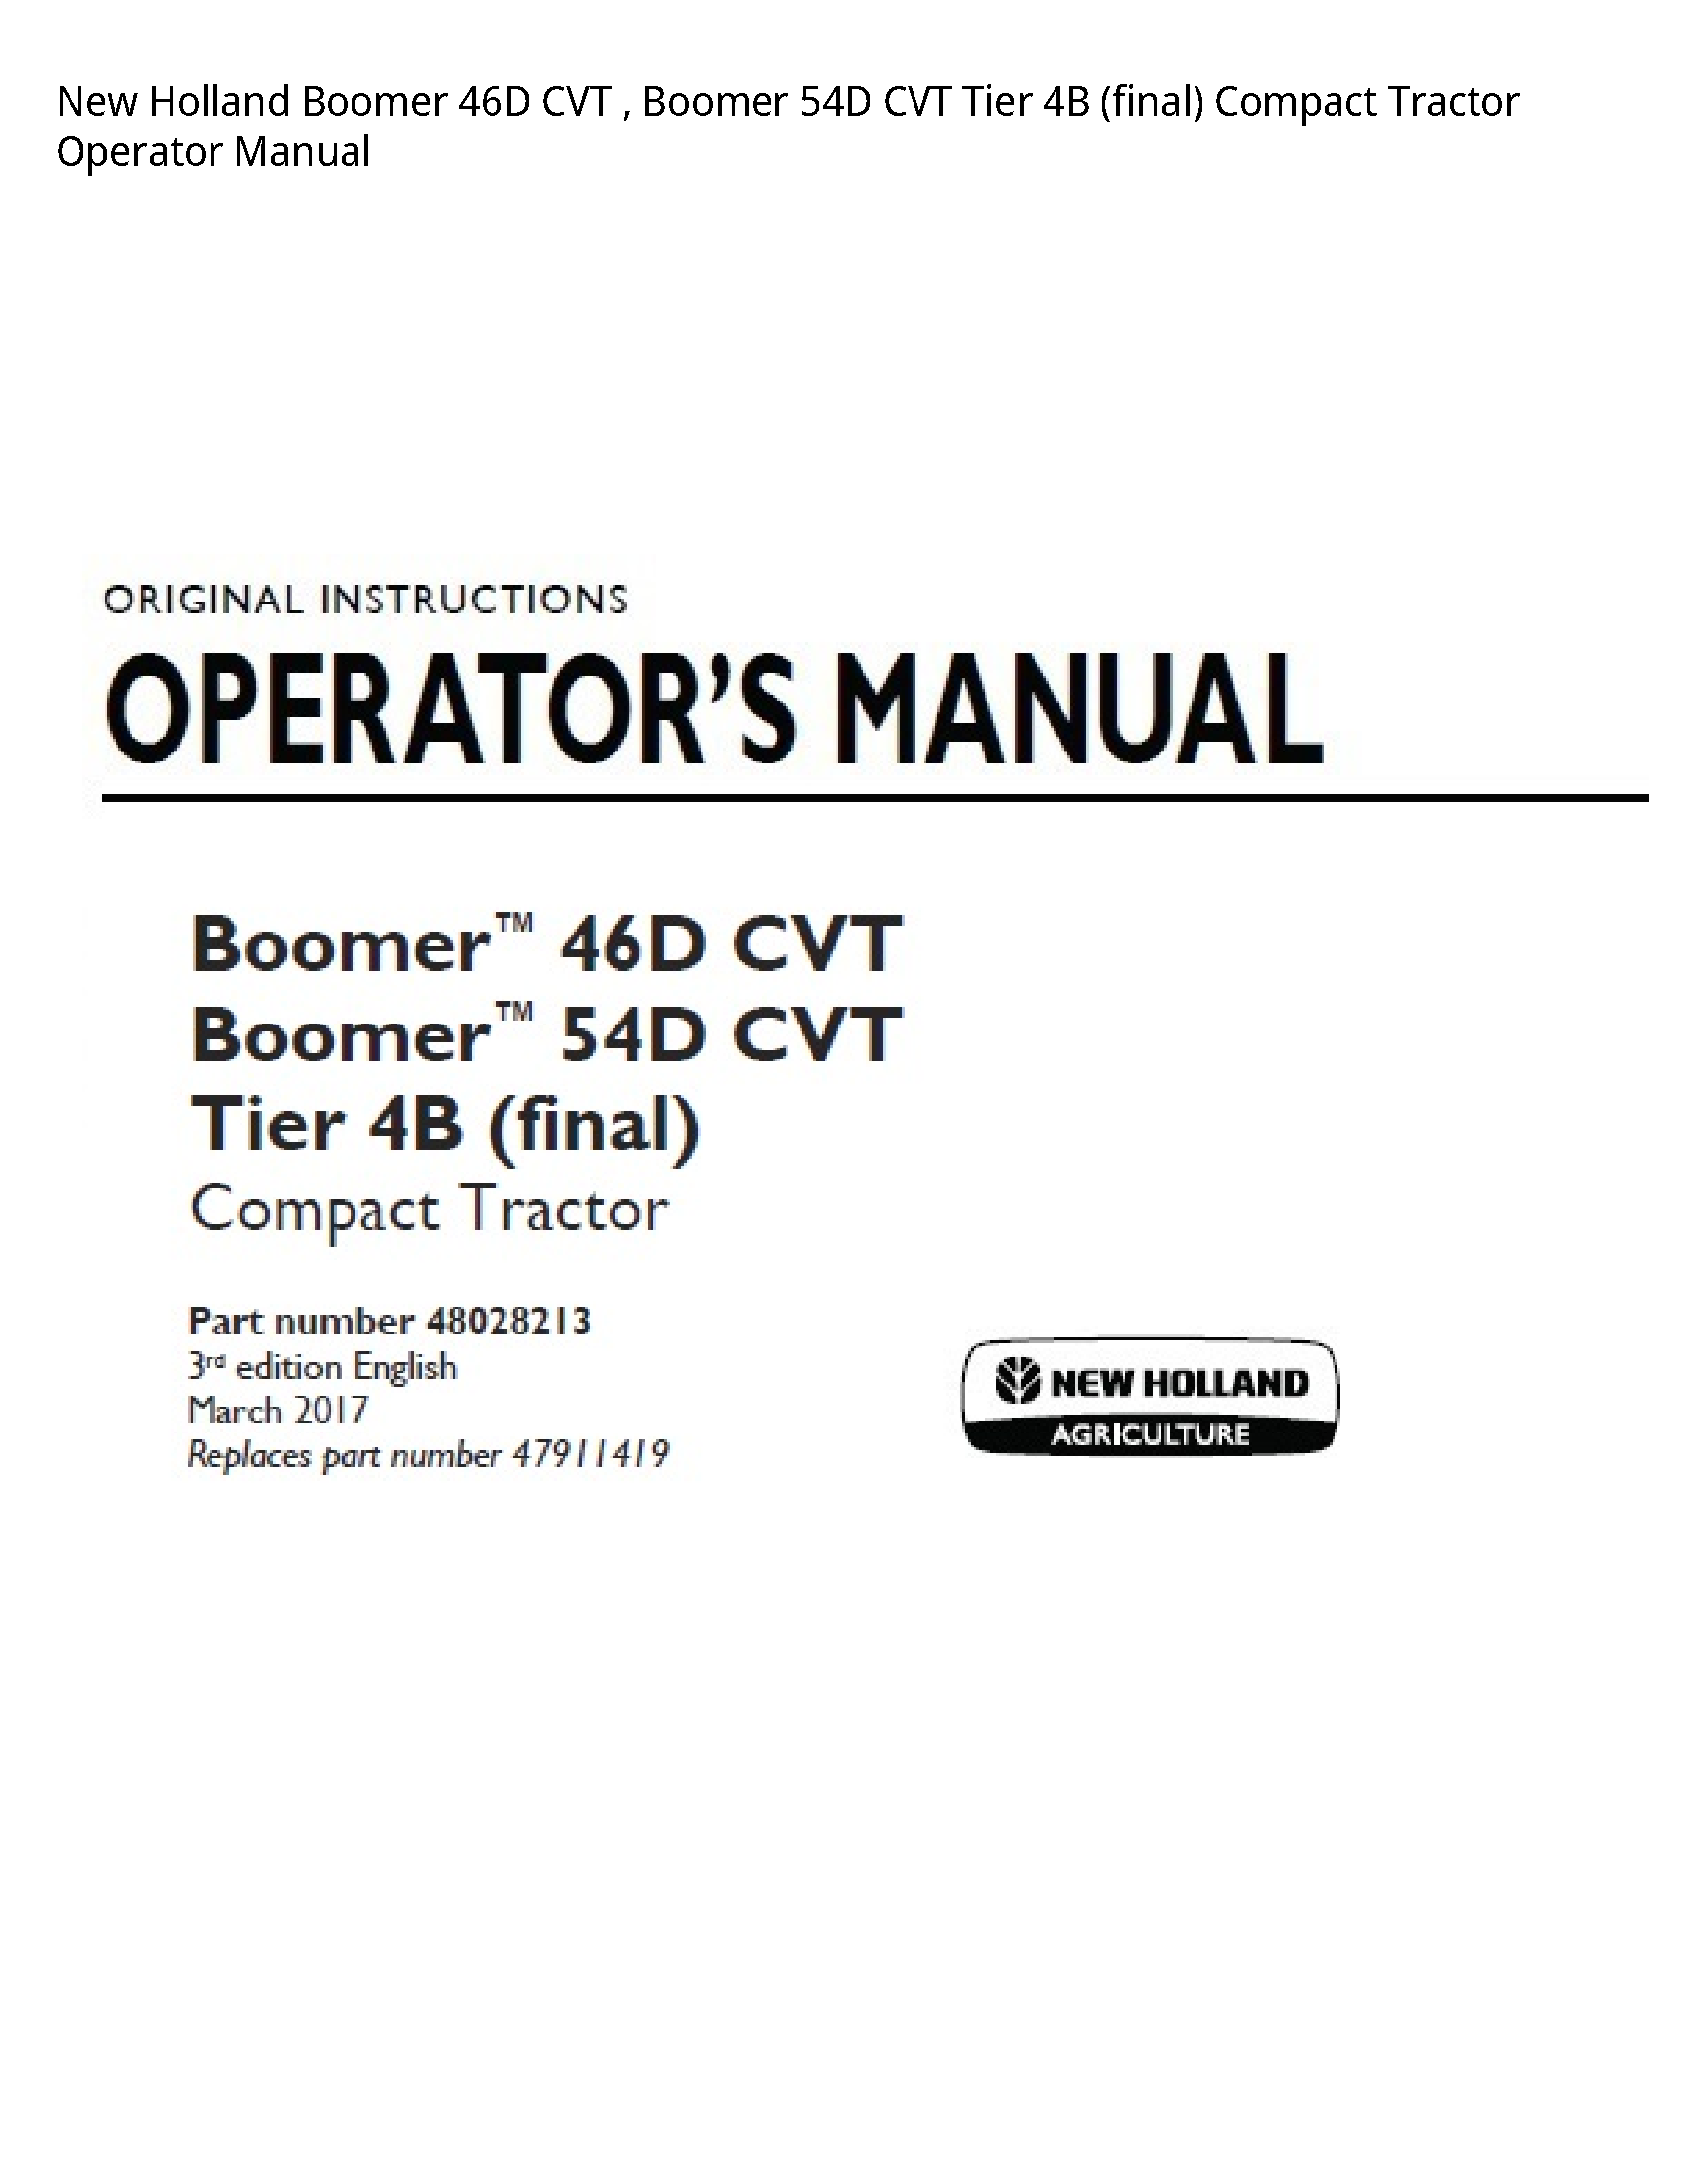 New Holland 46D Boomer CVT Boomer CVT Tier (final) Compact Tractor Operator manual